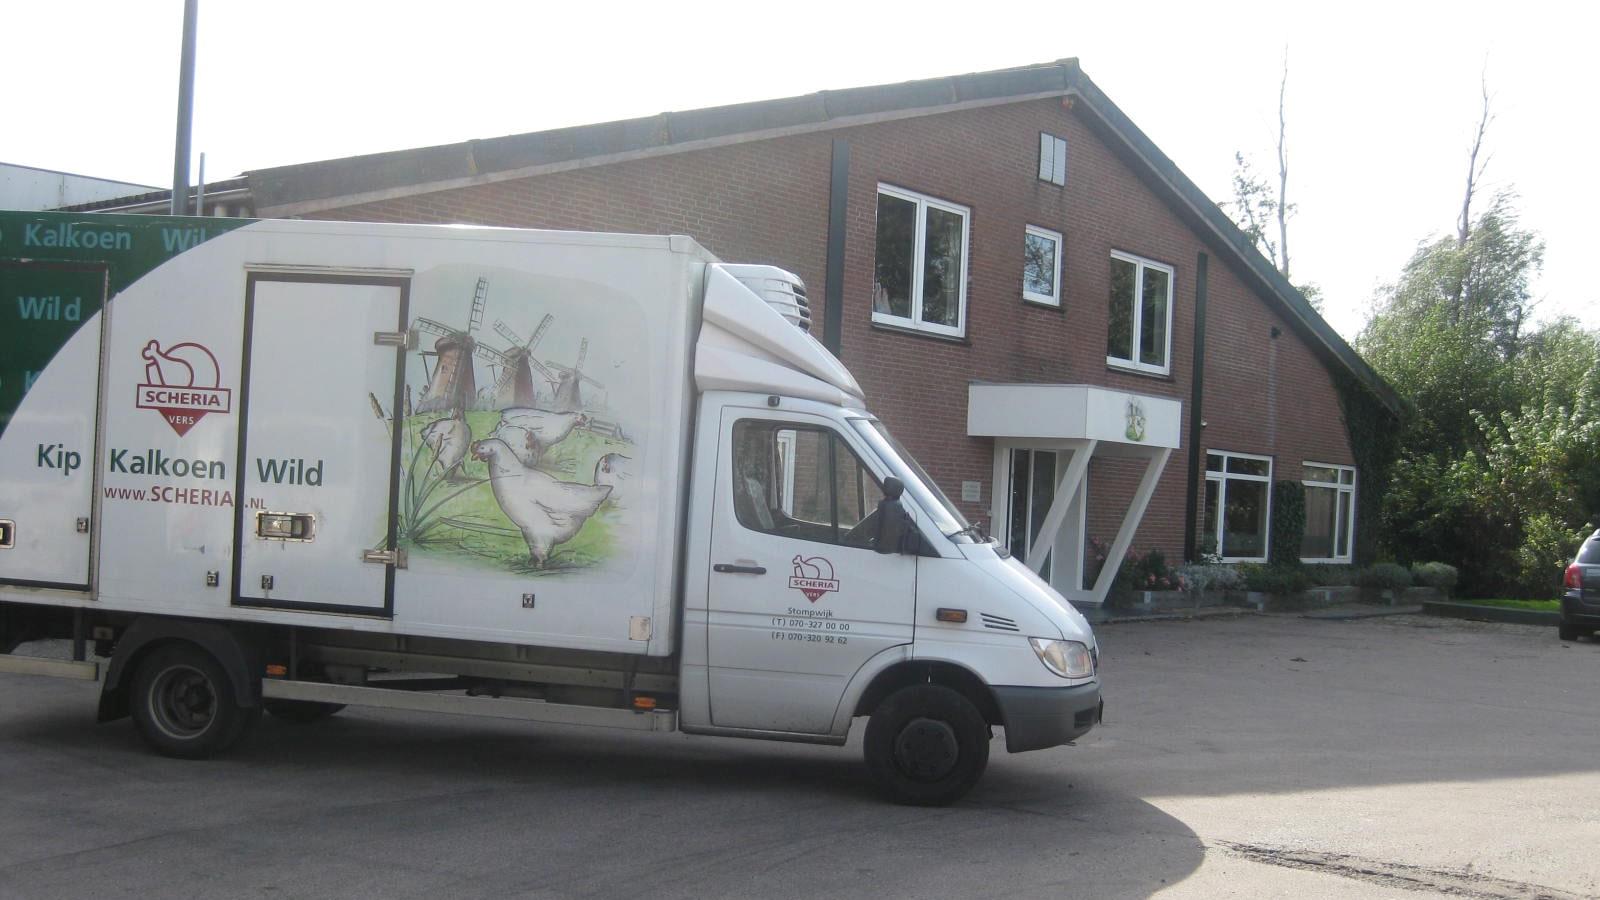 Van with chicken graphics standing outside Dutch company Scheria Versdienst